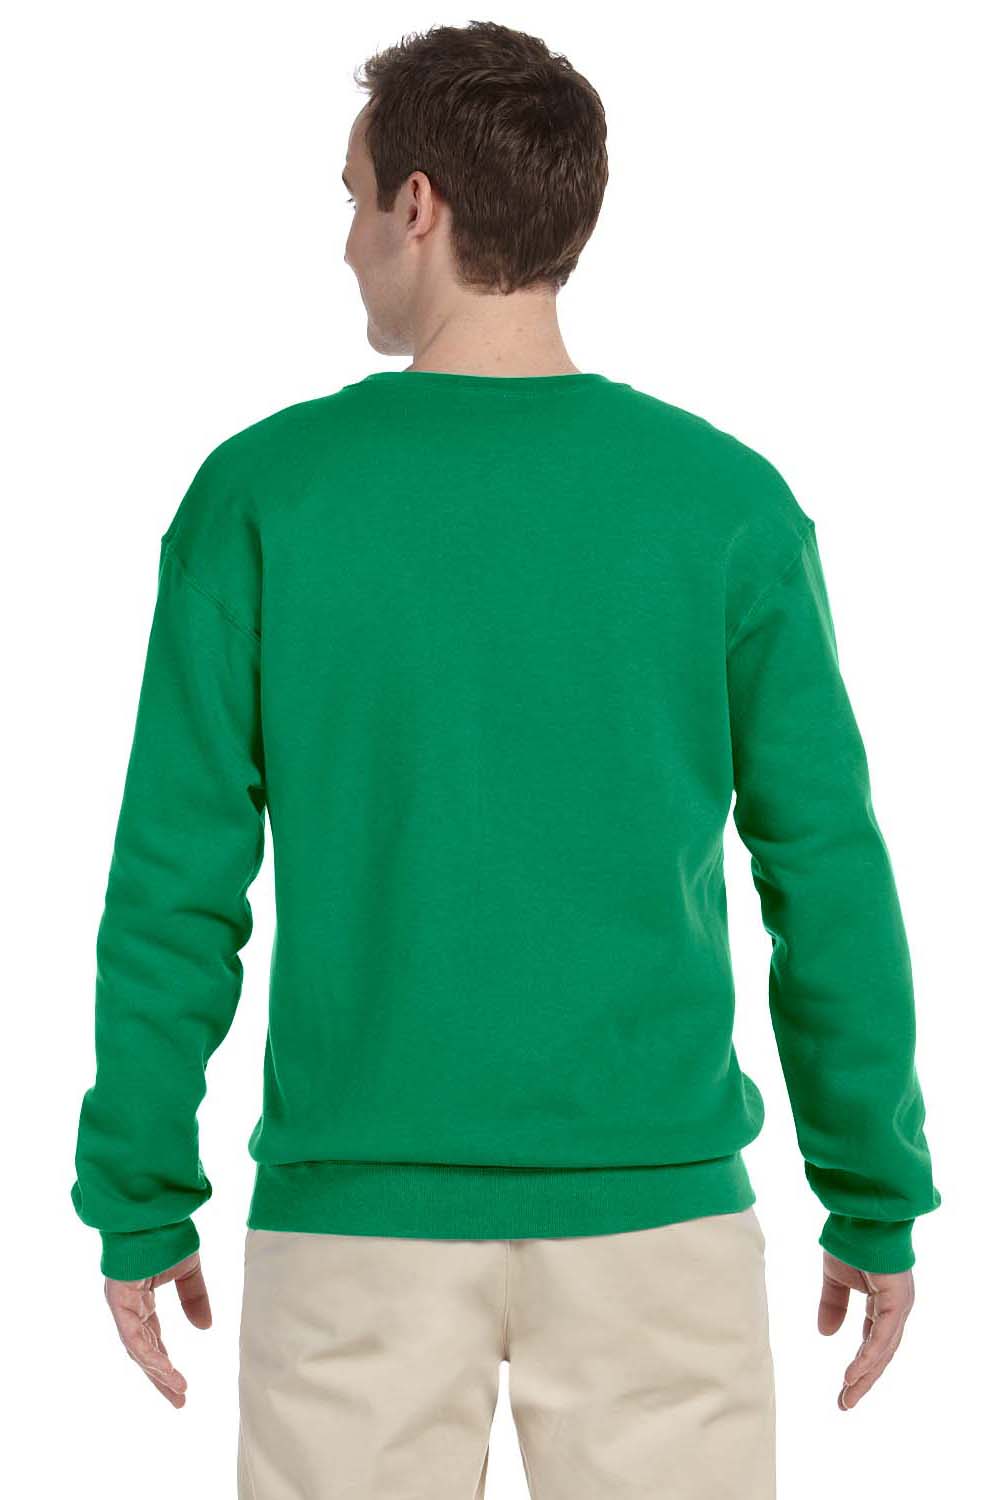 Jerzees NuBlend Crewneck Sweatshirt - Cool Mint - M